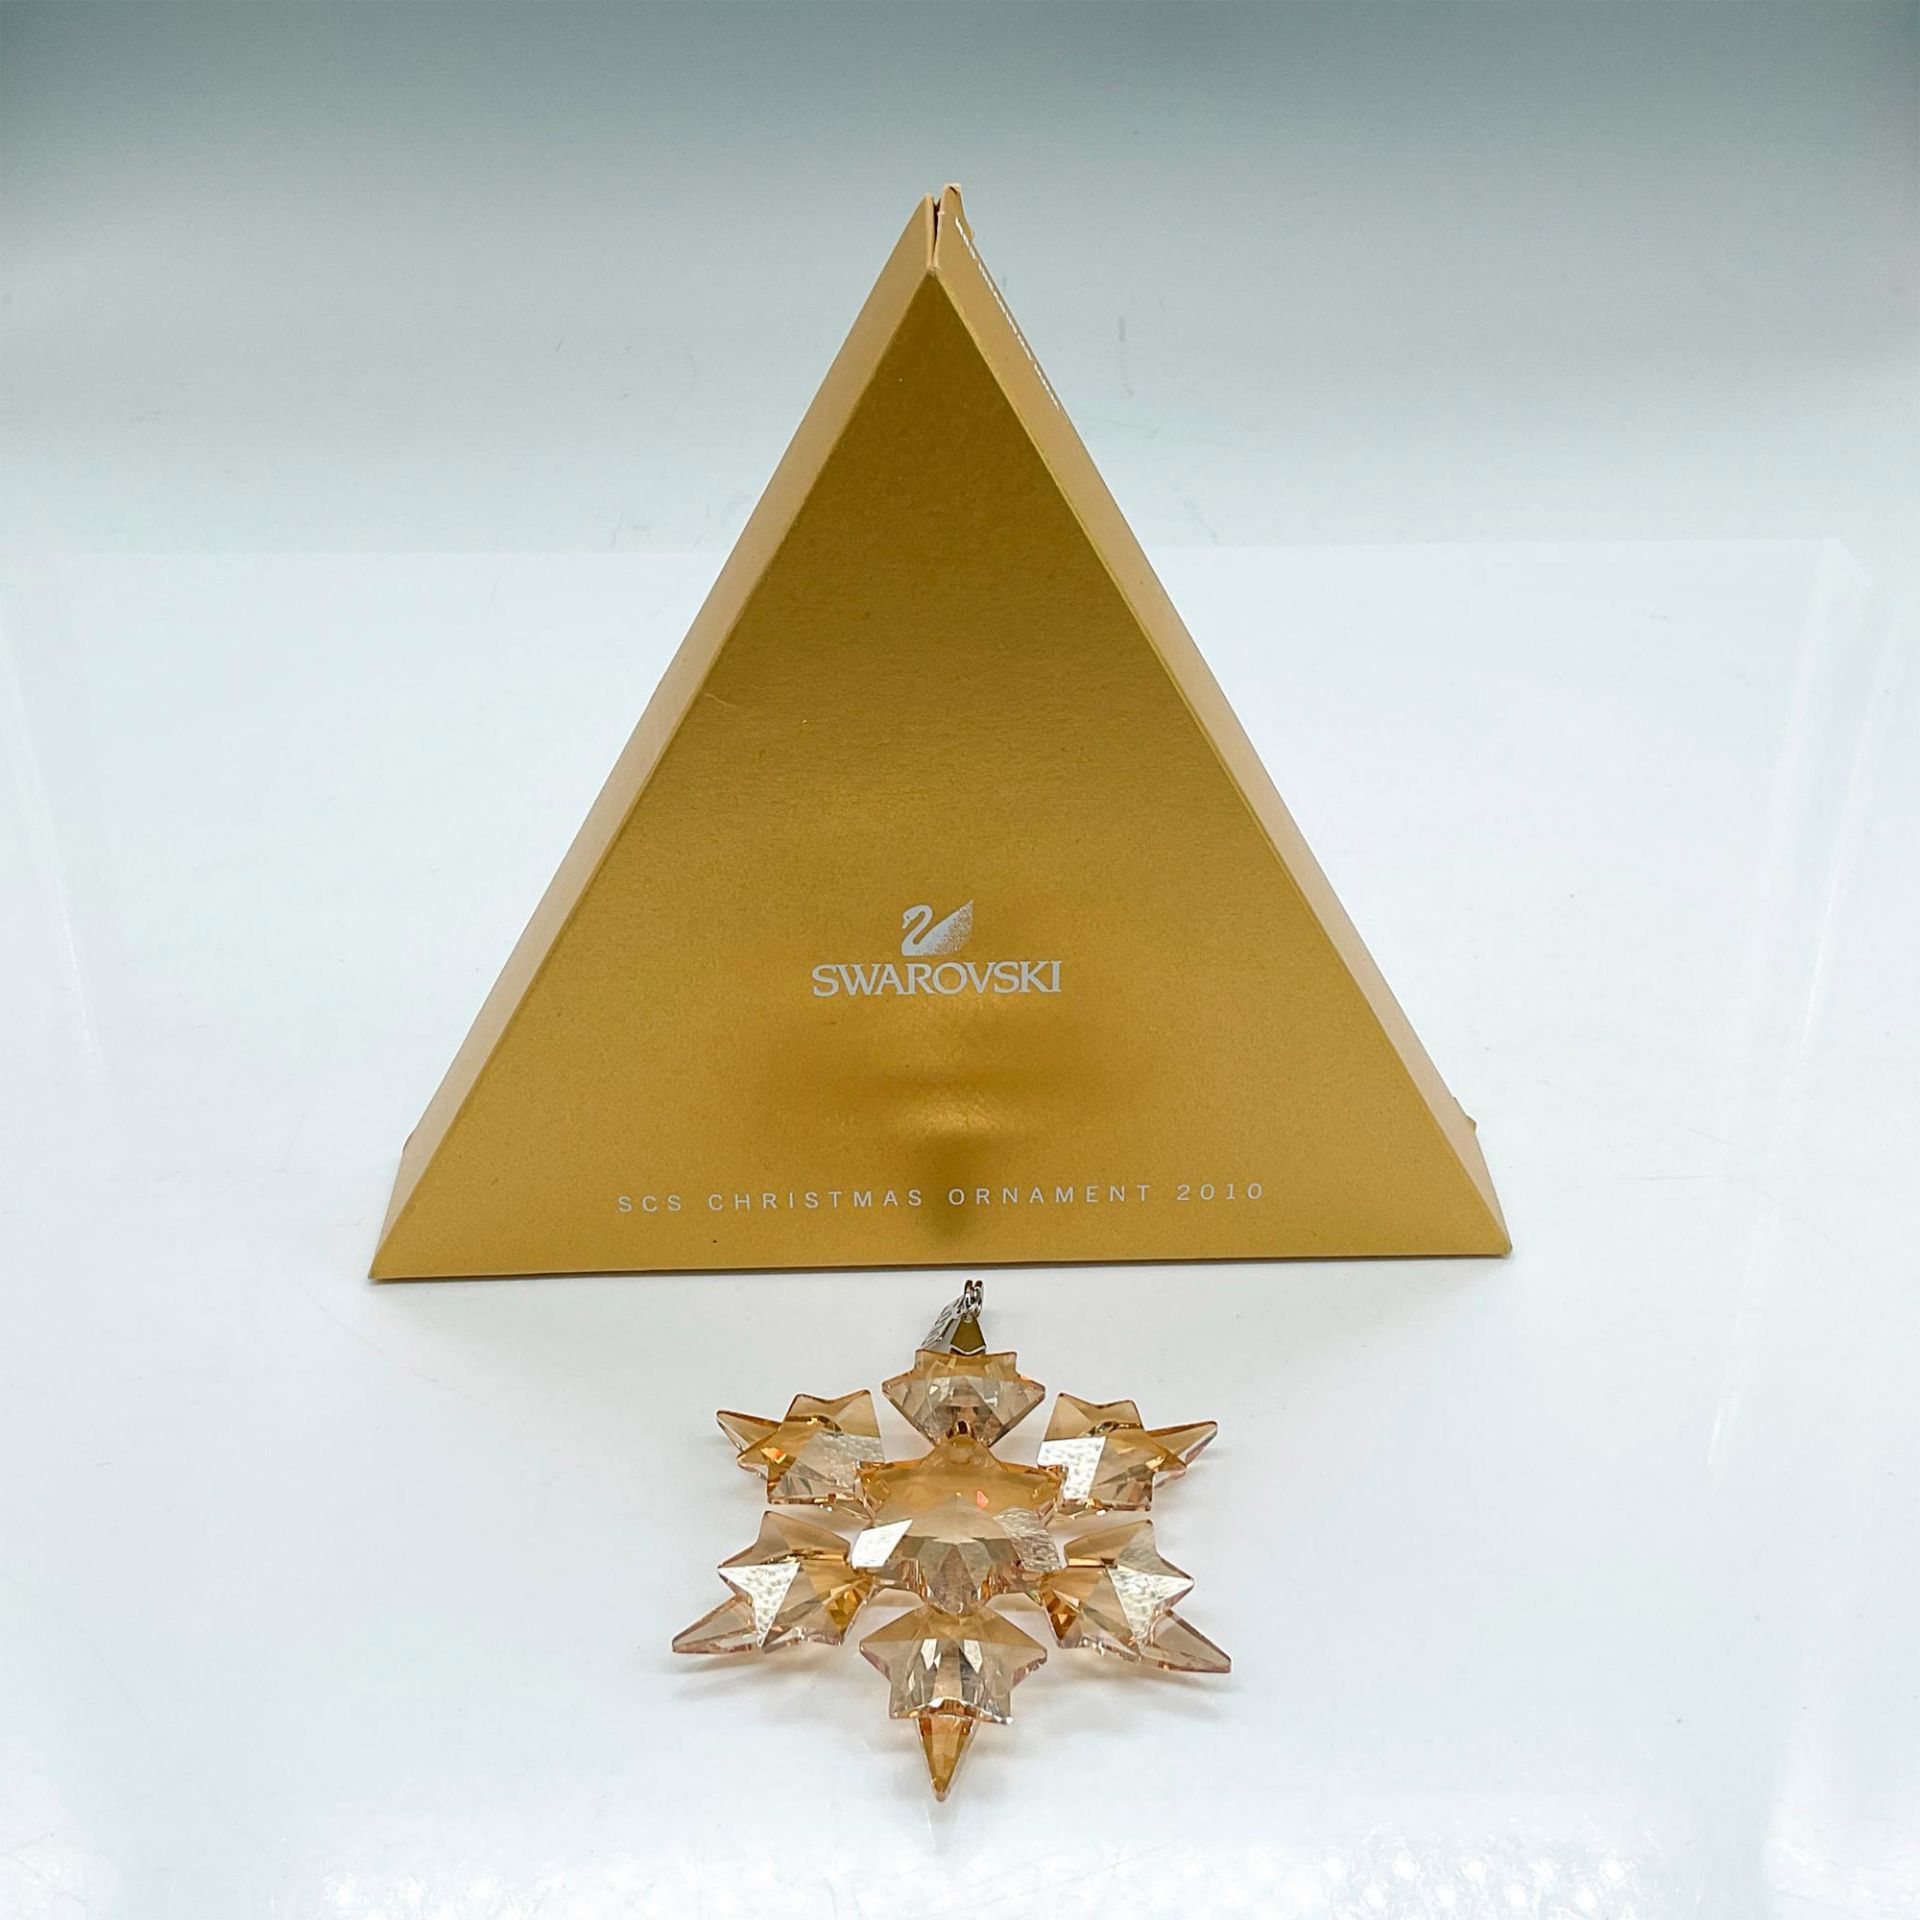 Swarovski Crystal SCS Gold Christmas Ornament 2010 - Image 3 of 3